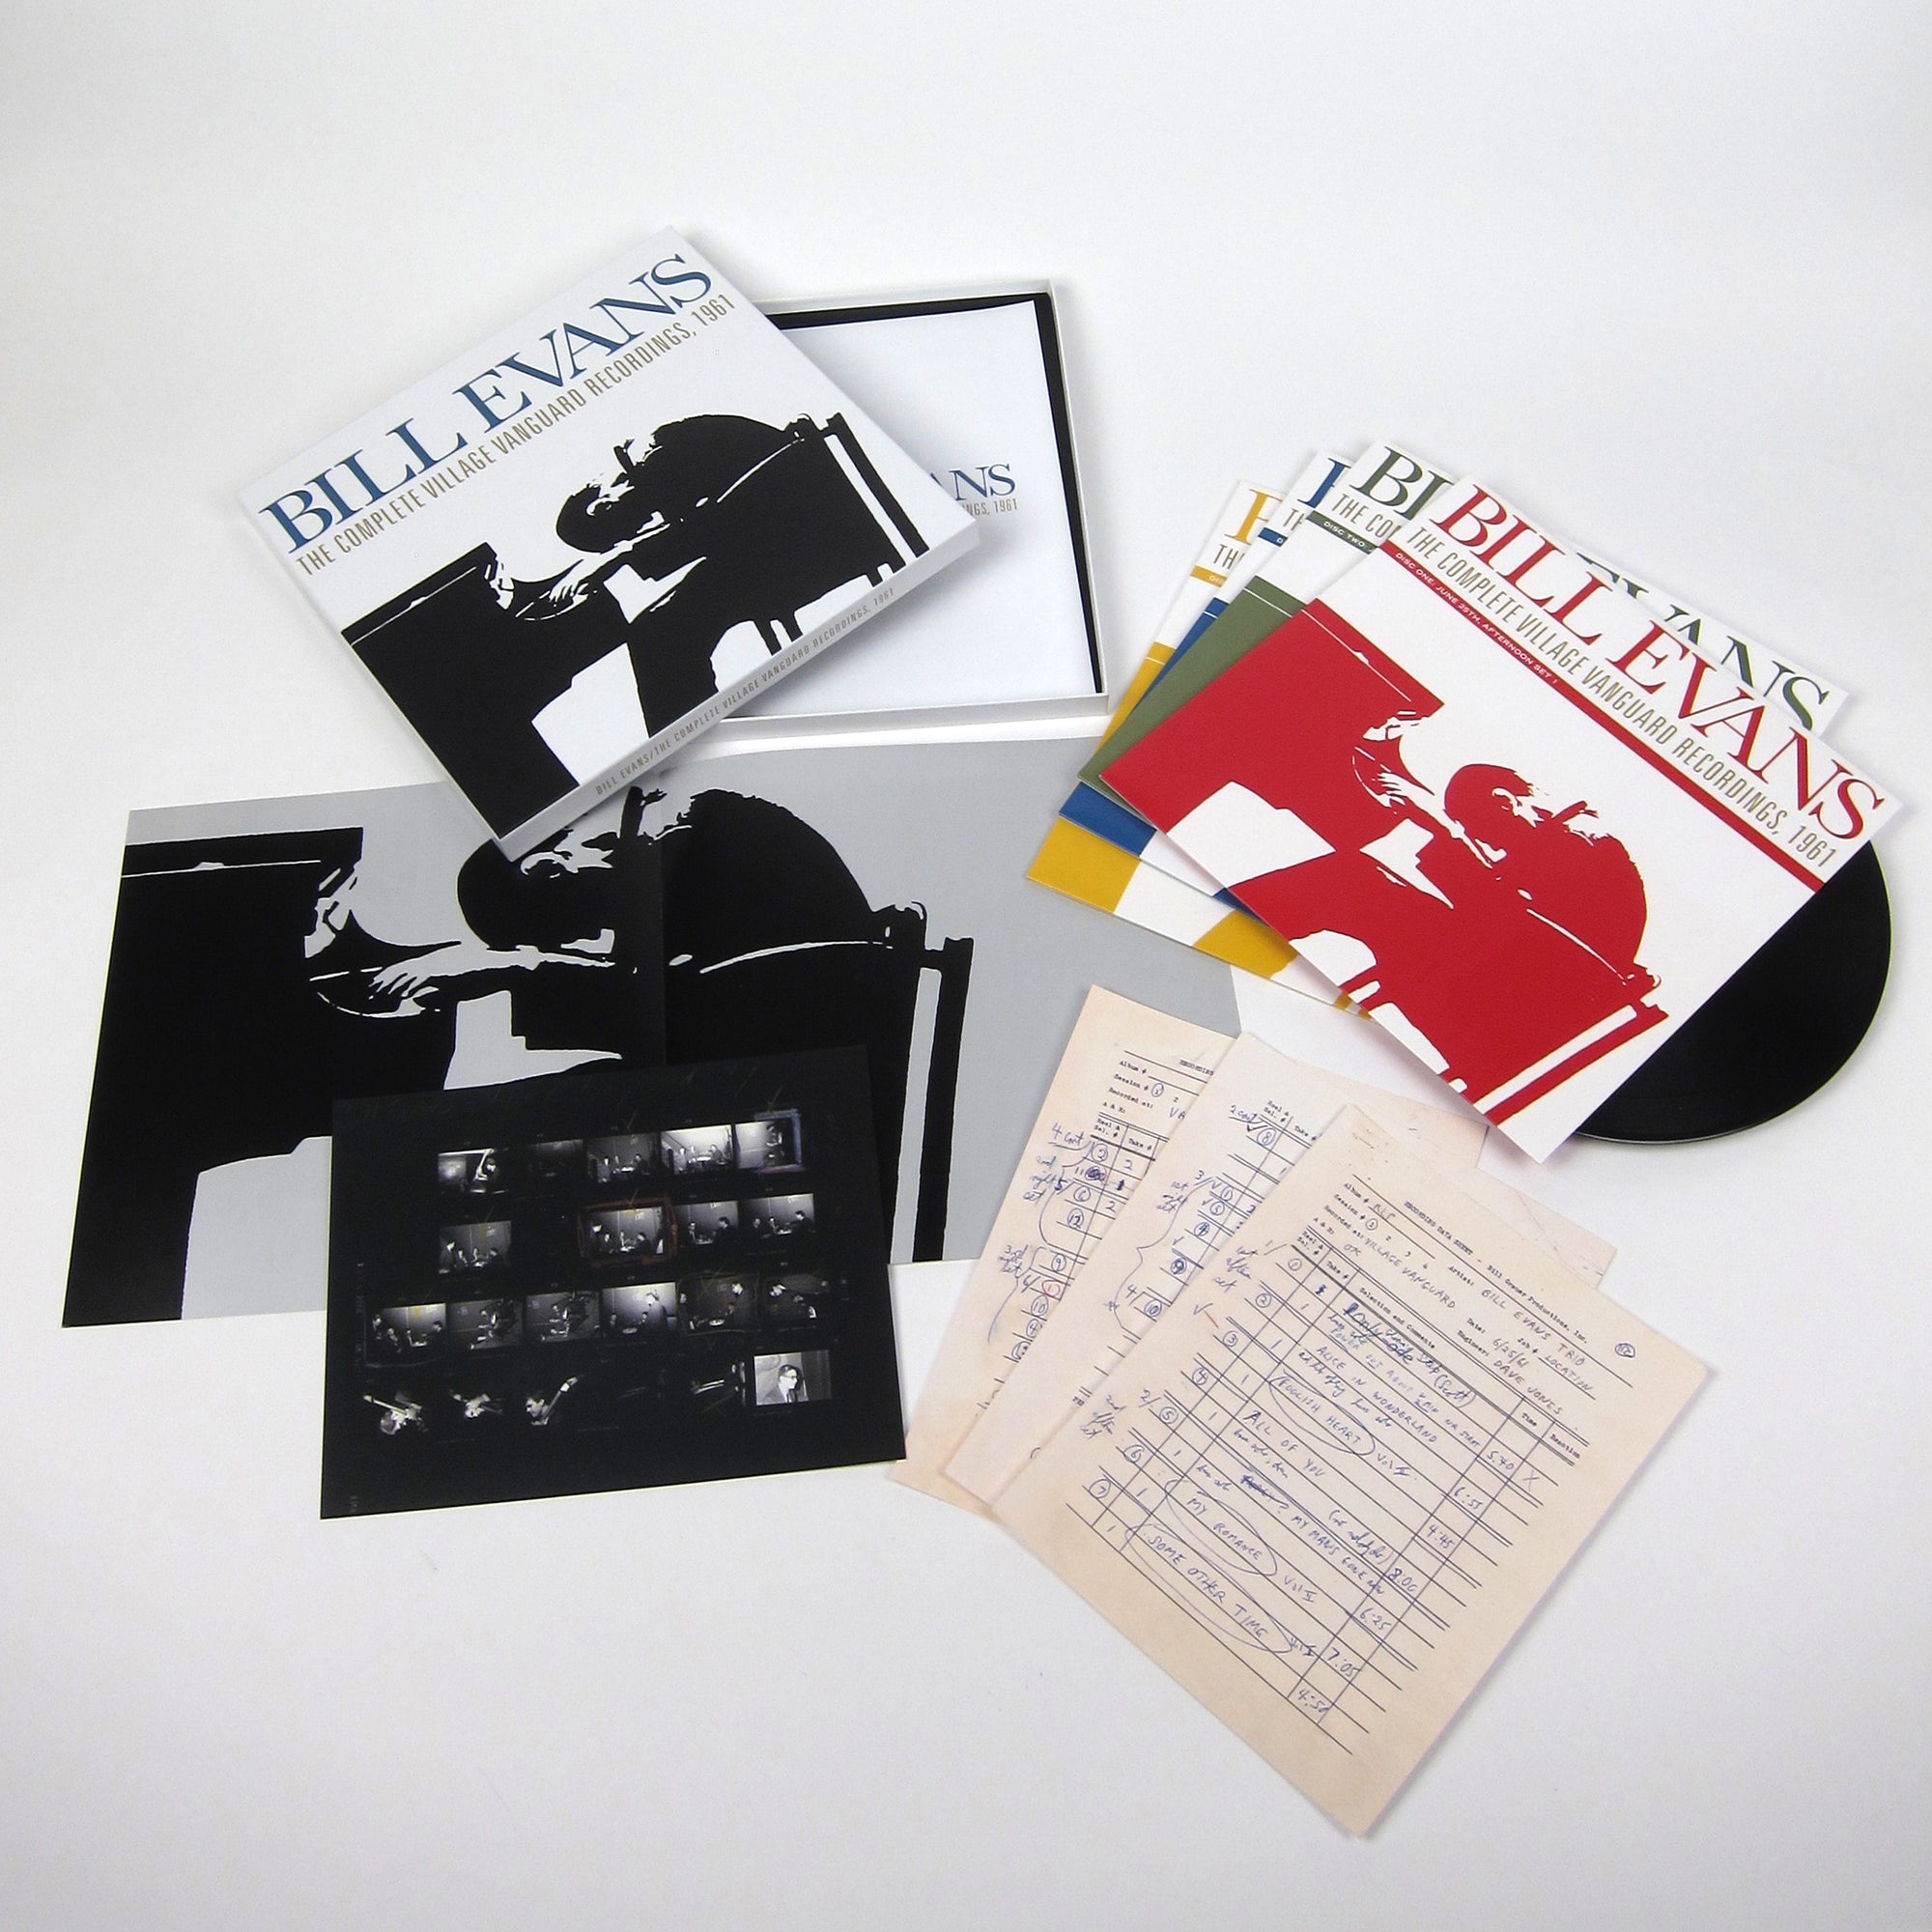 Bill Evans The Complete Village Vanguard Recordings 1961 180g Vinyl